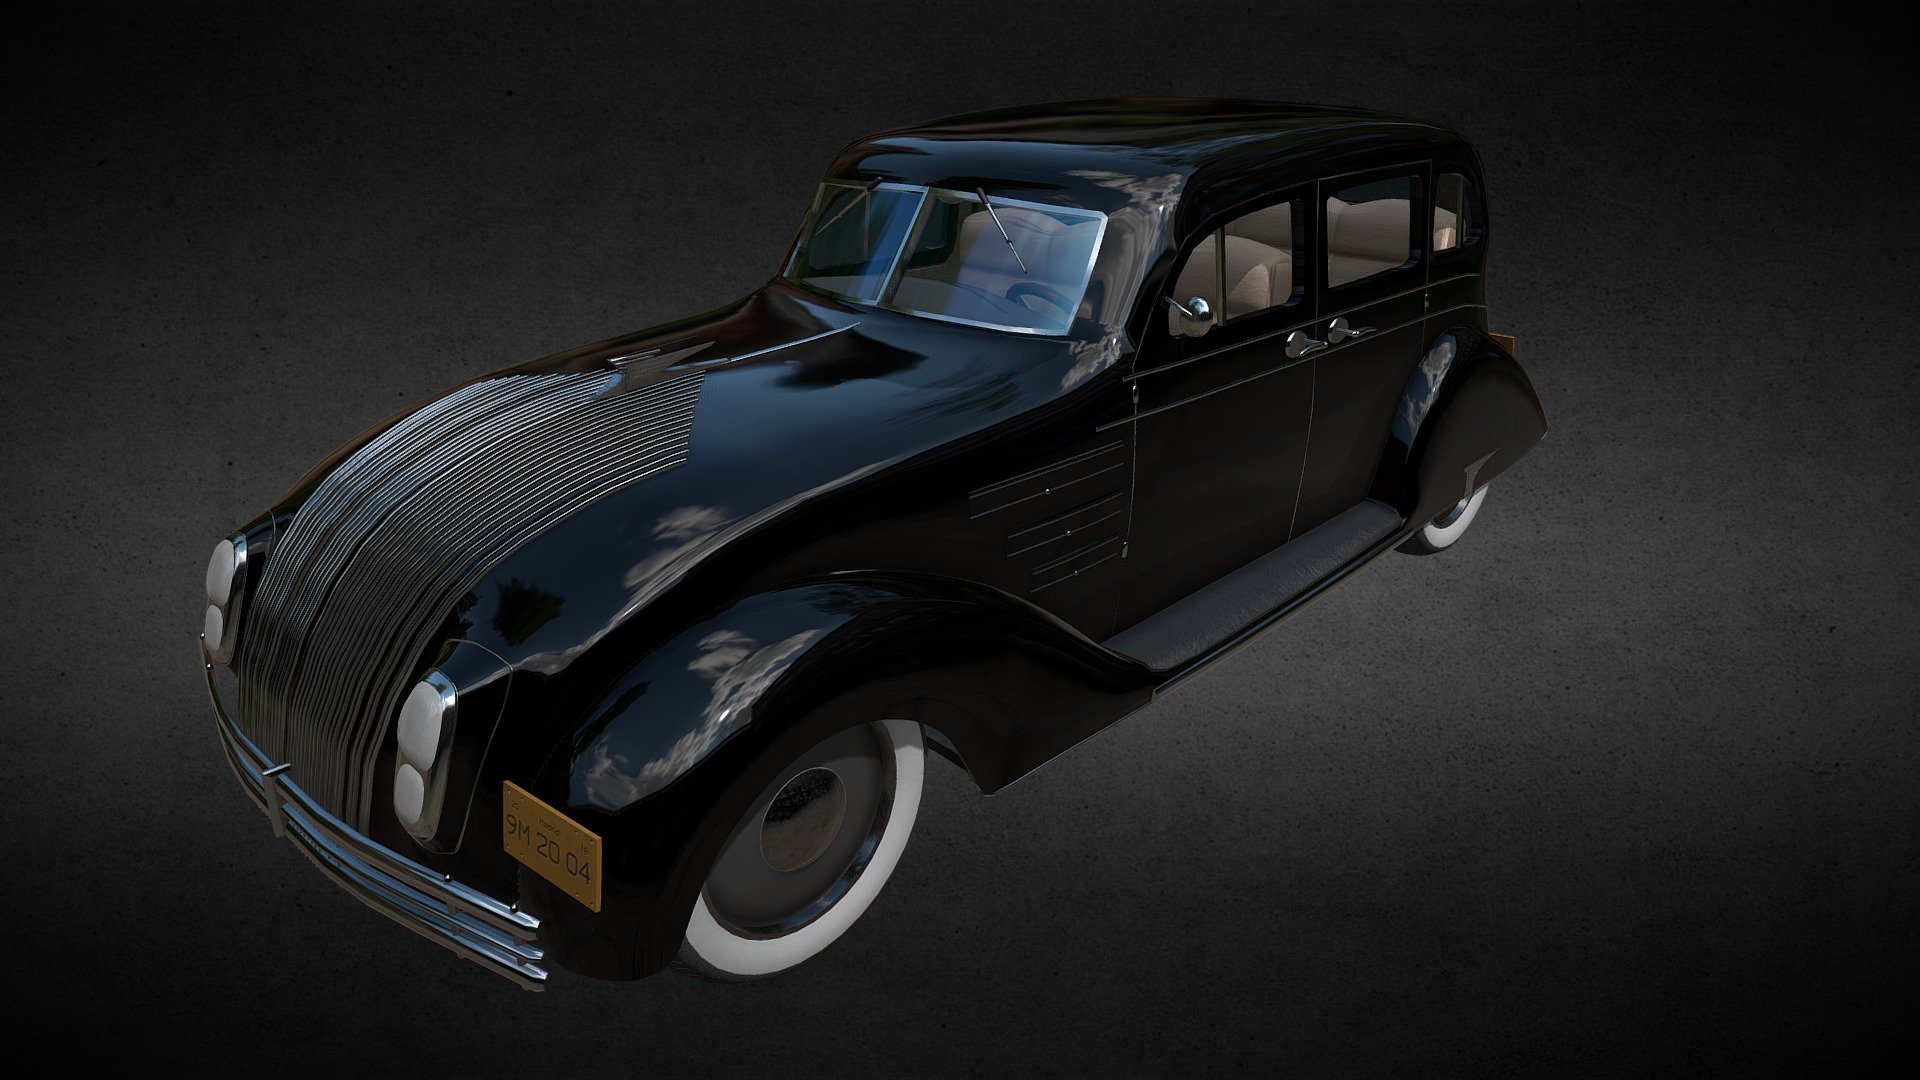 Chrysler Airflow 38 Car

https://www.artstation.com/artwork/8KOqw

Made in 3Dmax and textured in SubstancePainter - Mafia Car - 3D model by Bryan Villaseca (@BryanVillaseca) 3d model